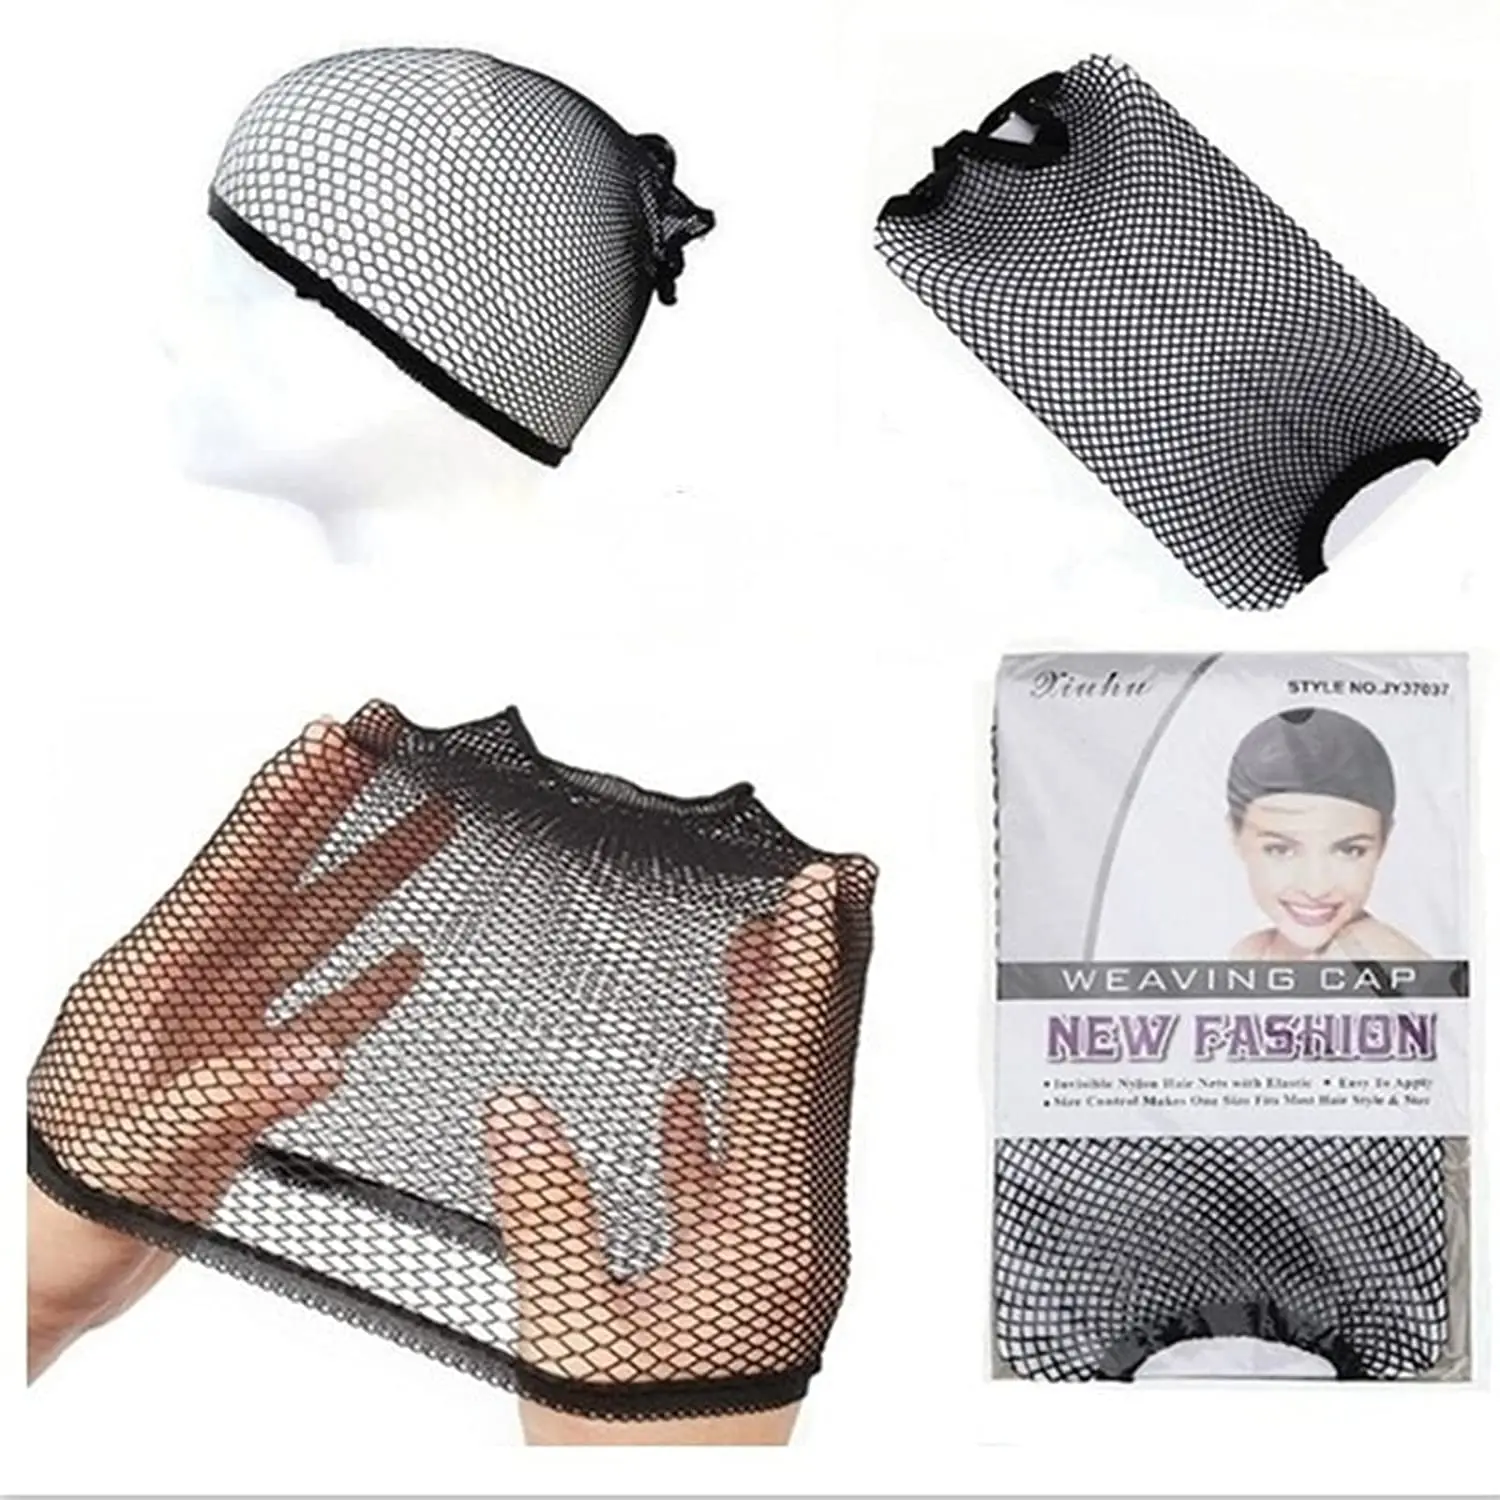 Stretchable Elastic Hair Net Black Weaving Cap Snood Mesh Wig Cap for Wigs Women Cosplay Hair Accessories image_1